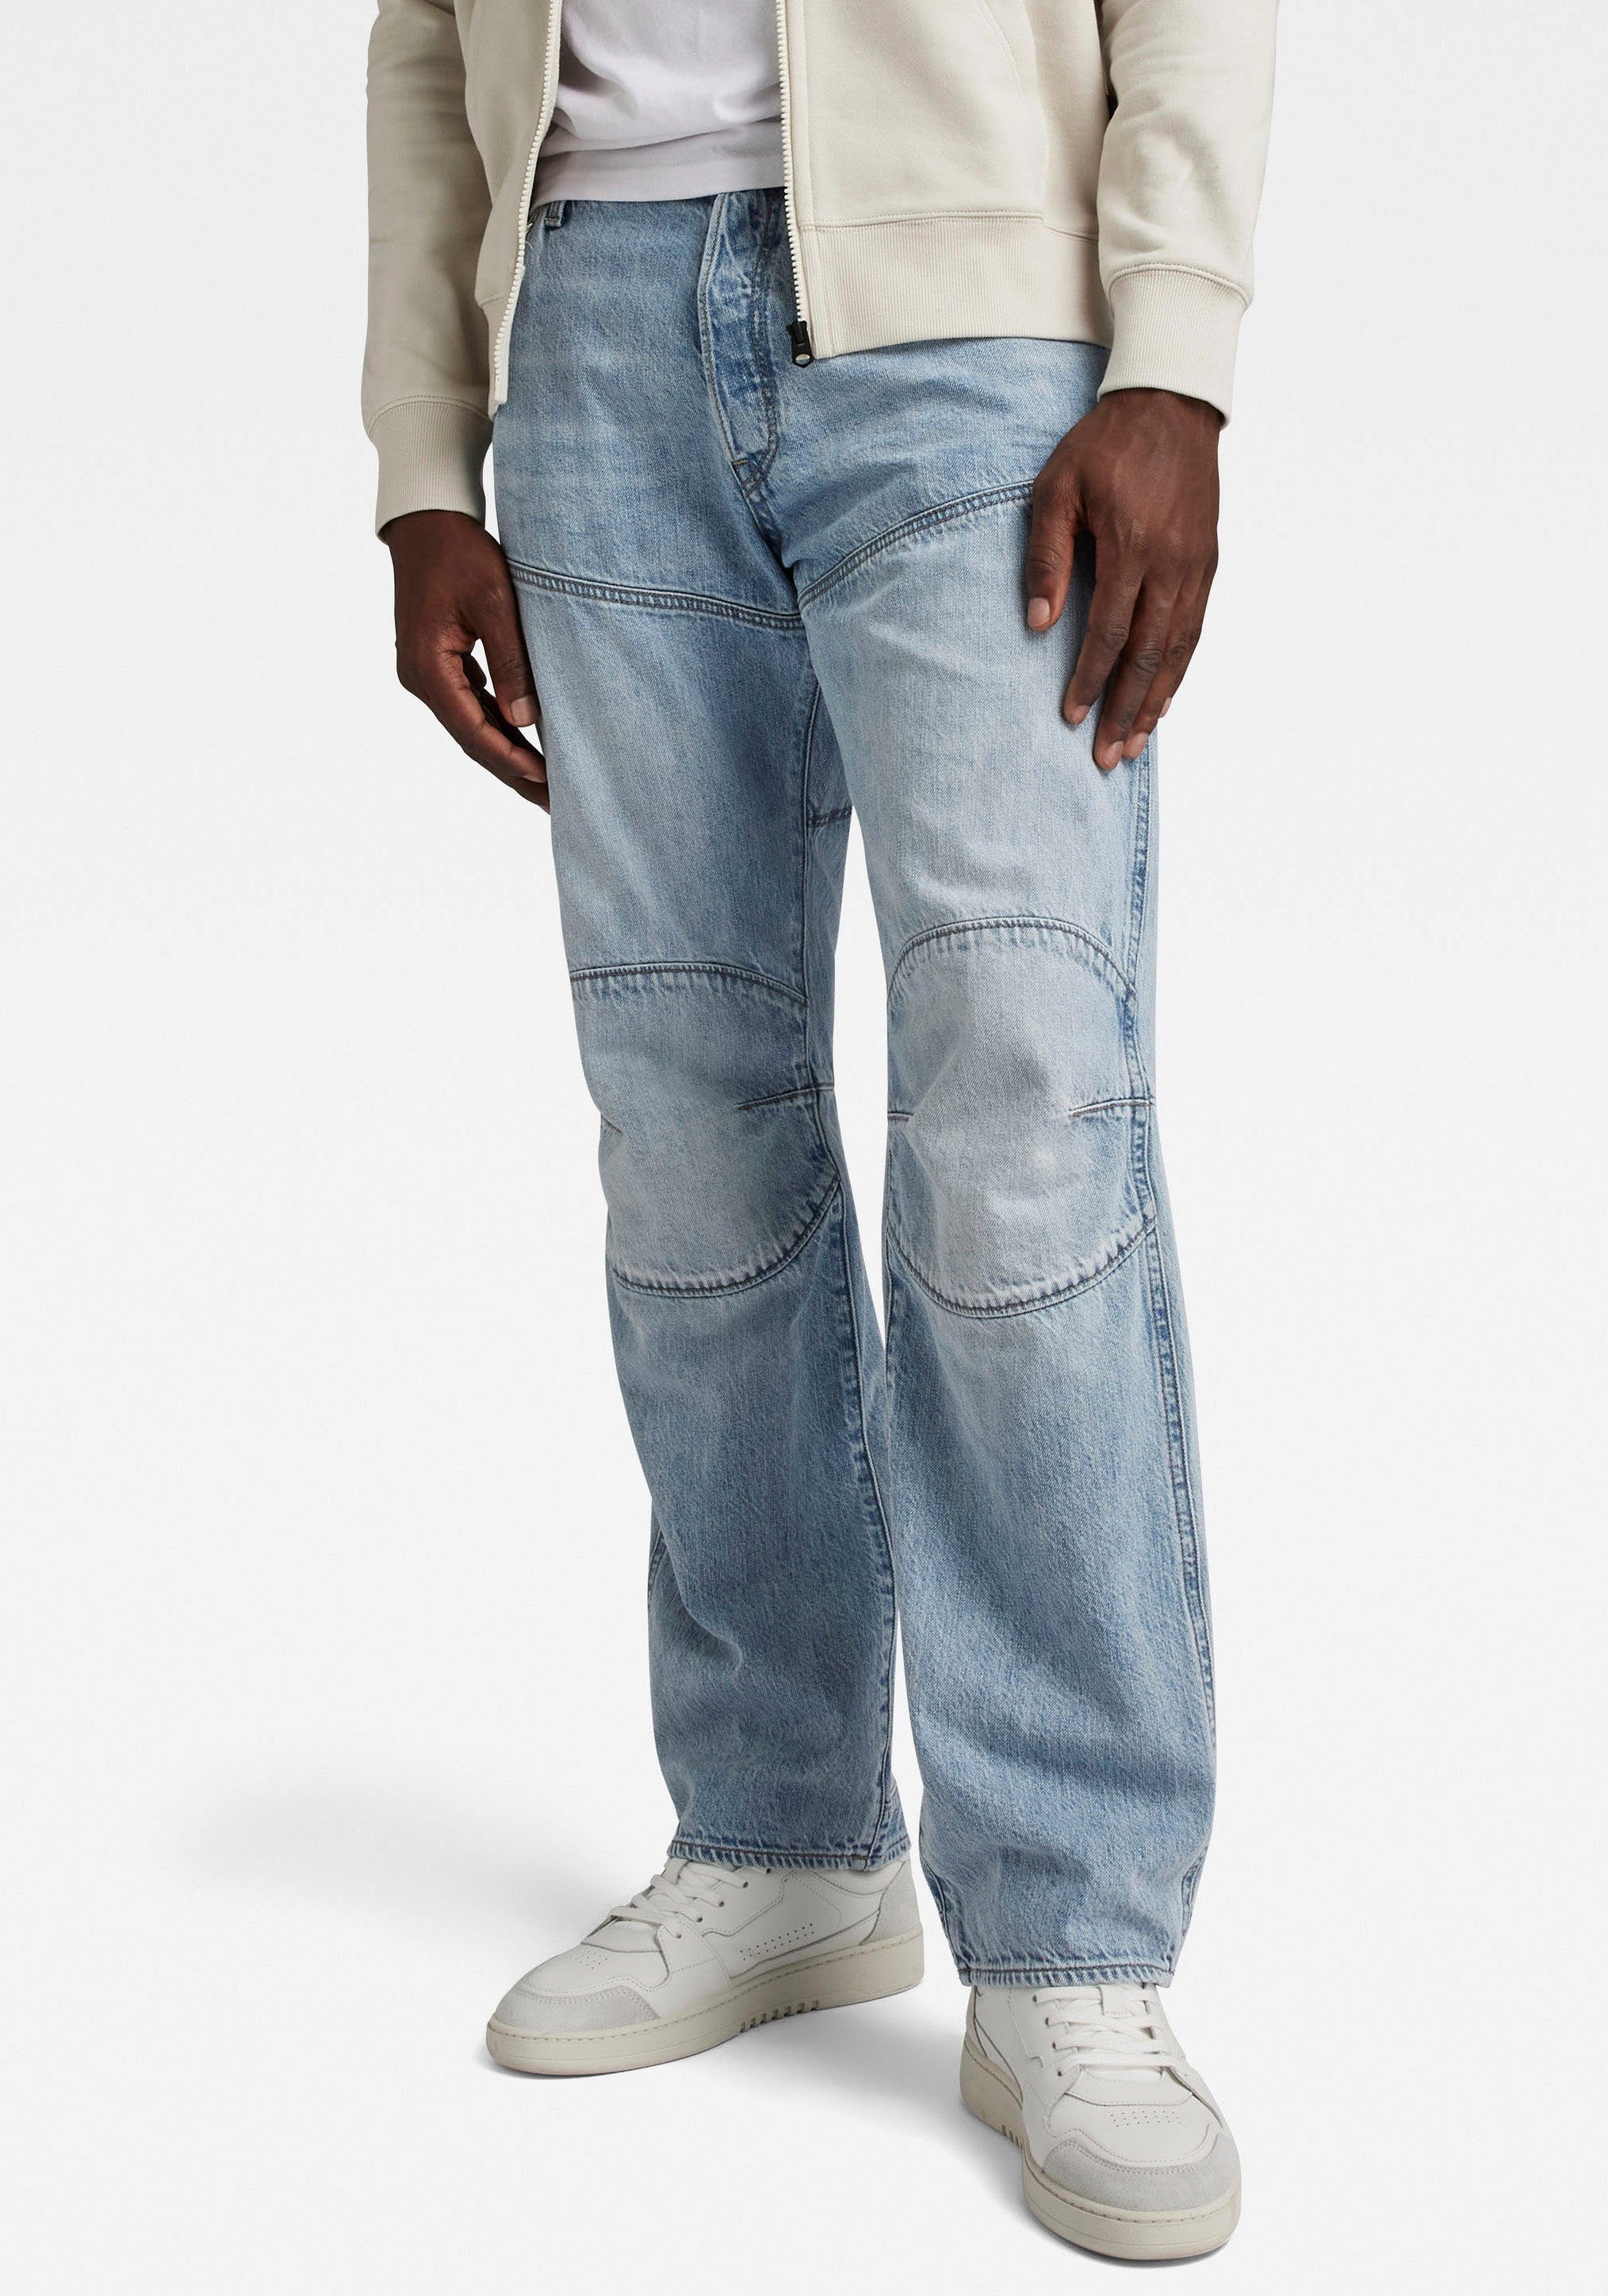 G-Star RAW Regular fit jeans 5620 3D Regular